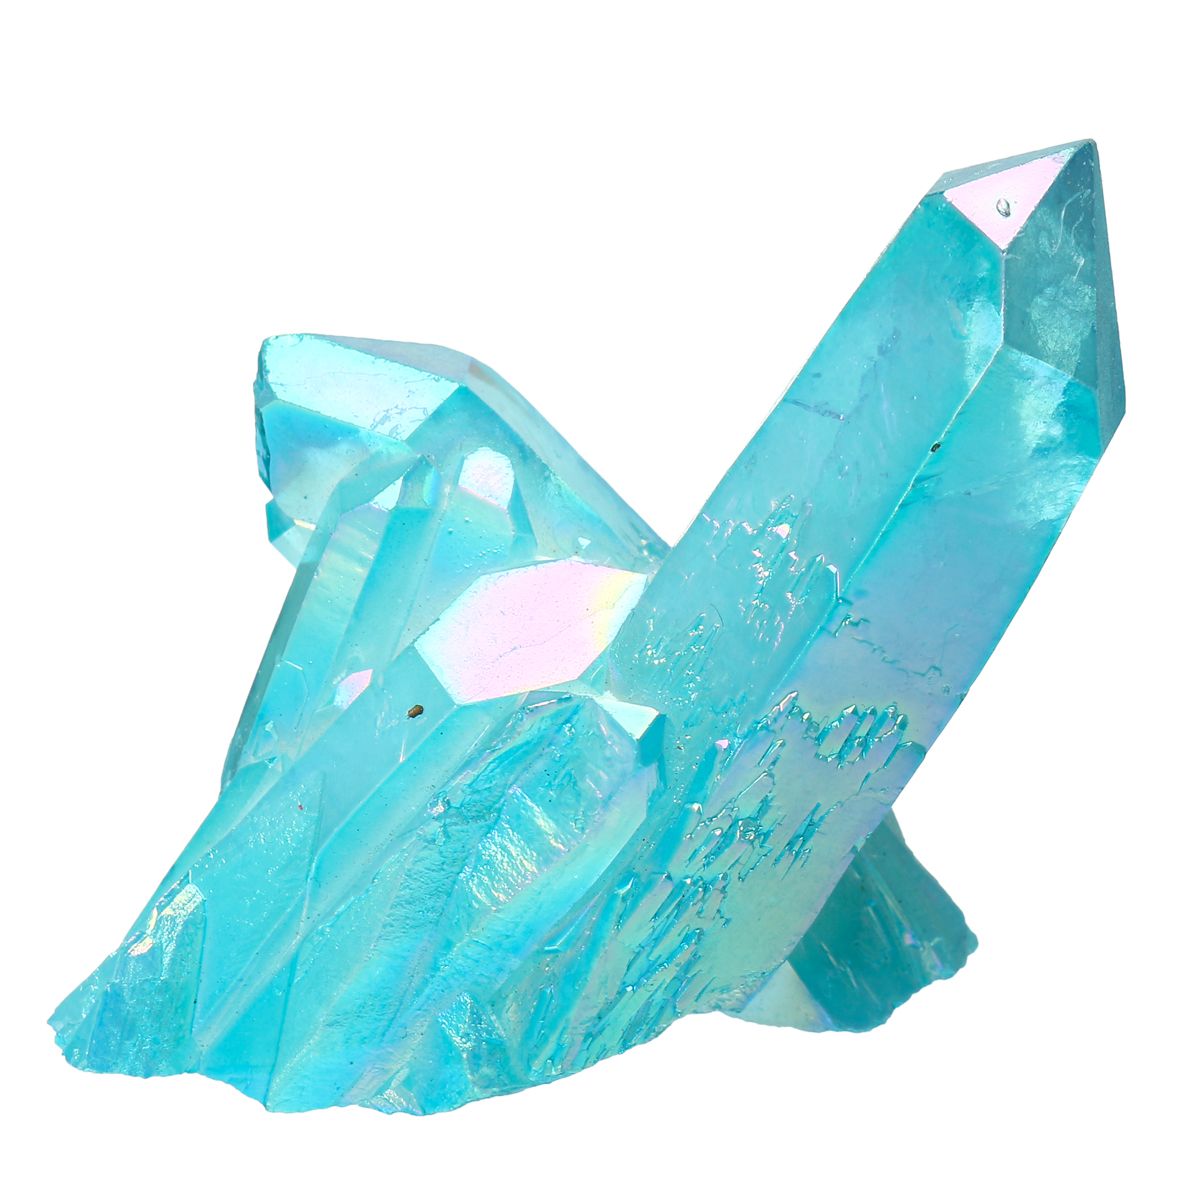 Clear-Quartz-Cluster-Mineral-Specimen-Crystal-Healing-Natural-Home-Decorations-1482462